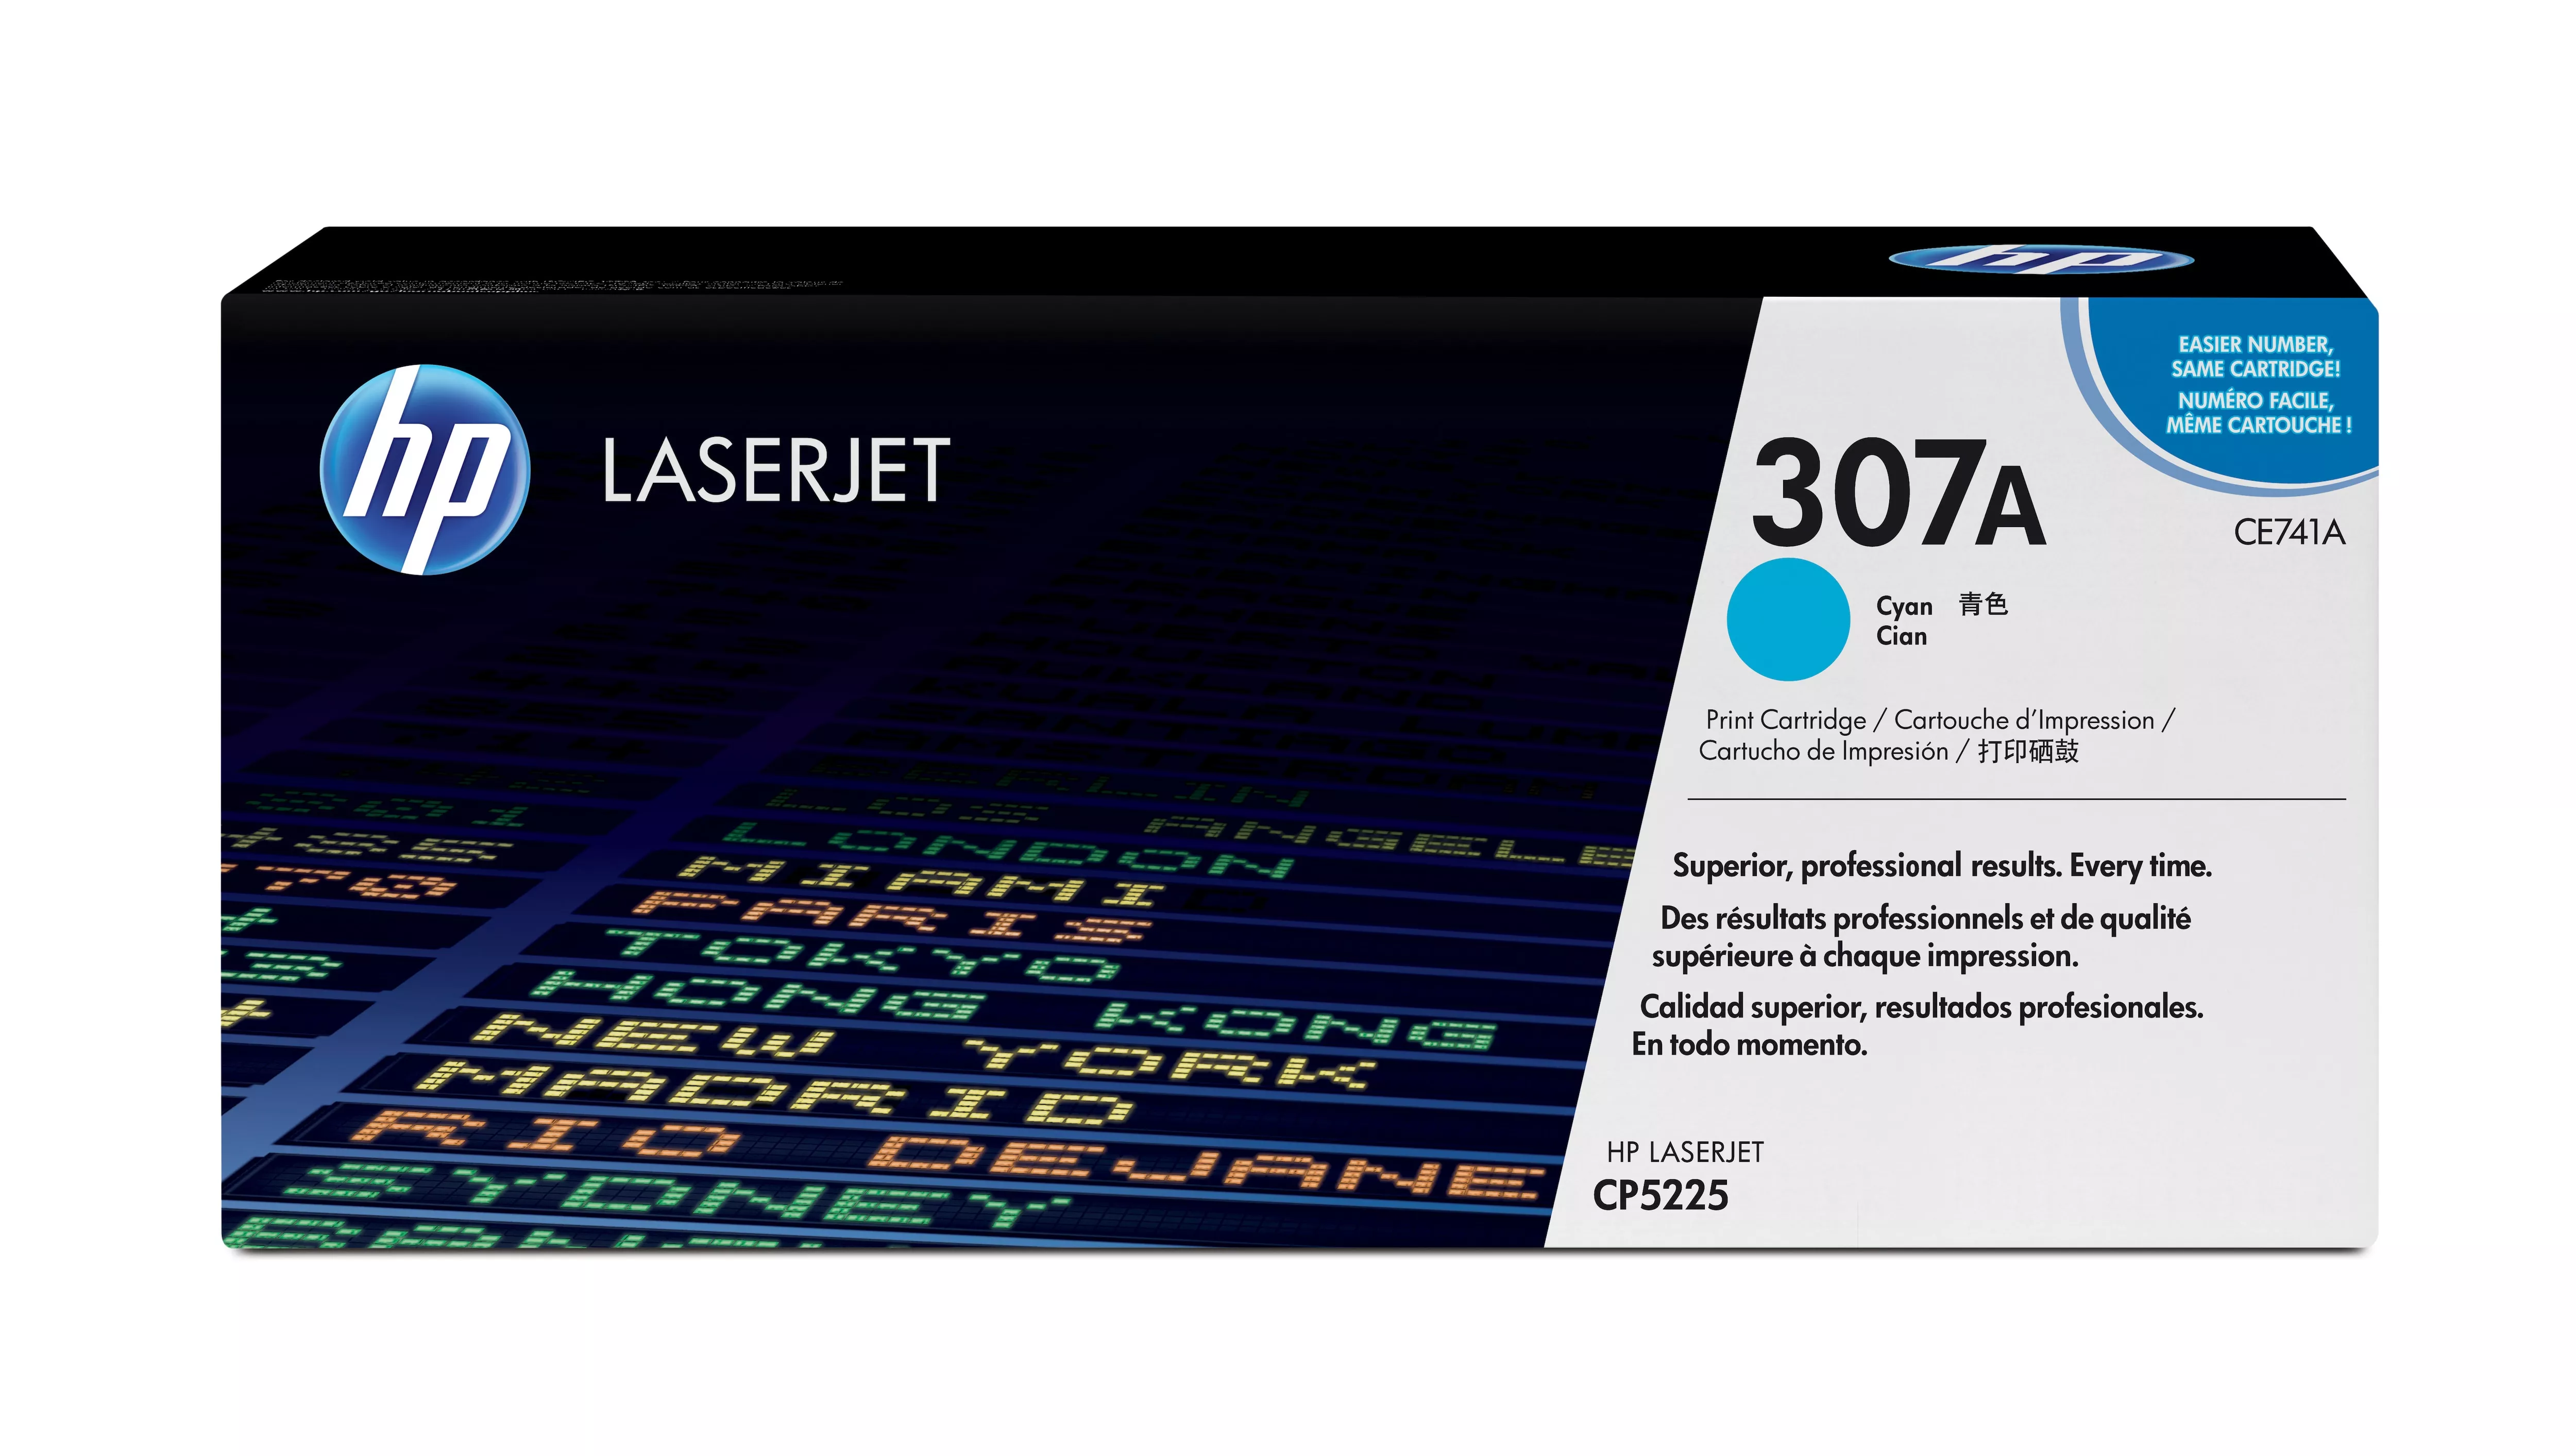 Vente HP original Colour LaserJet CE741A Toner cartridge cyan au meilleur prix